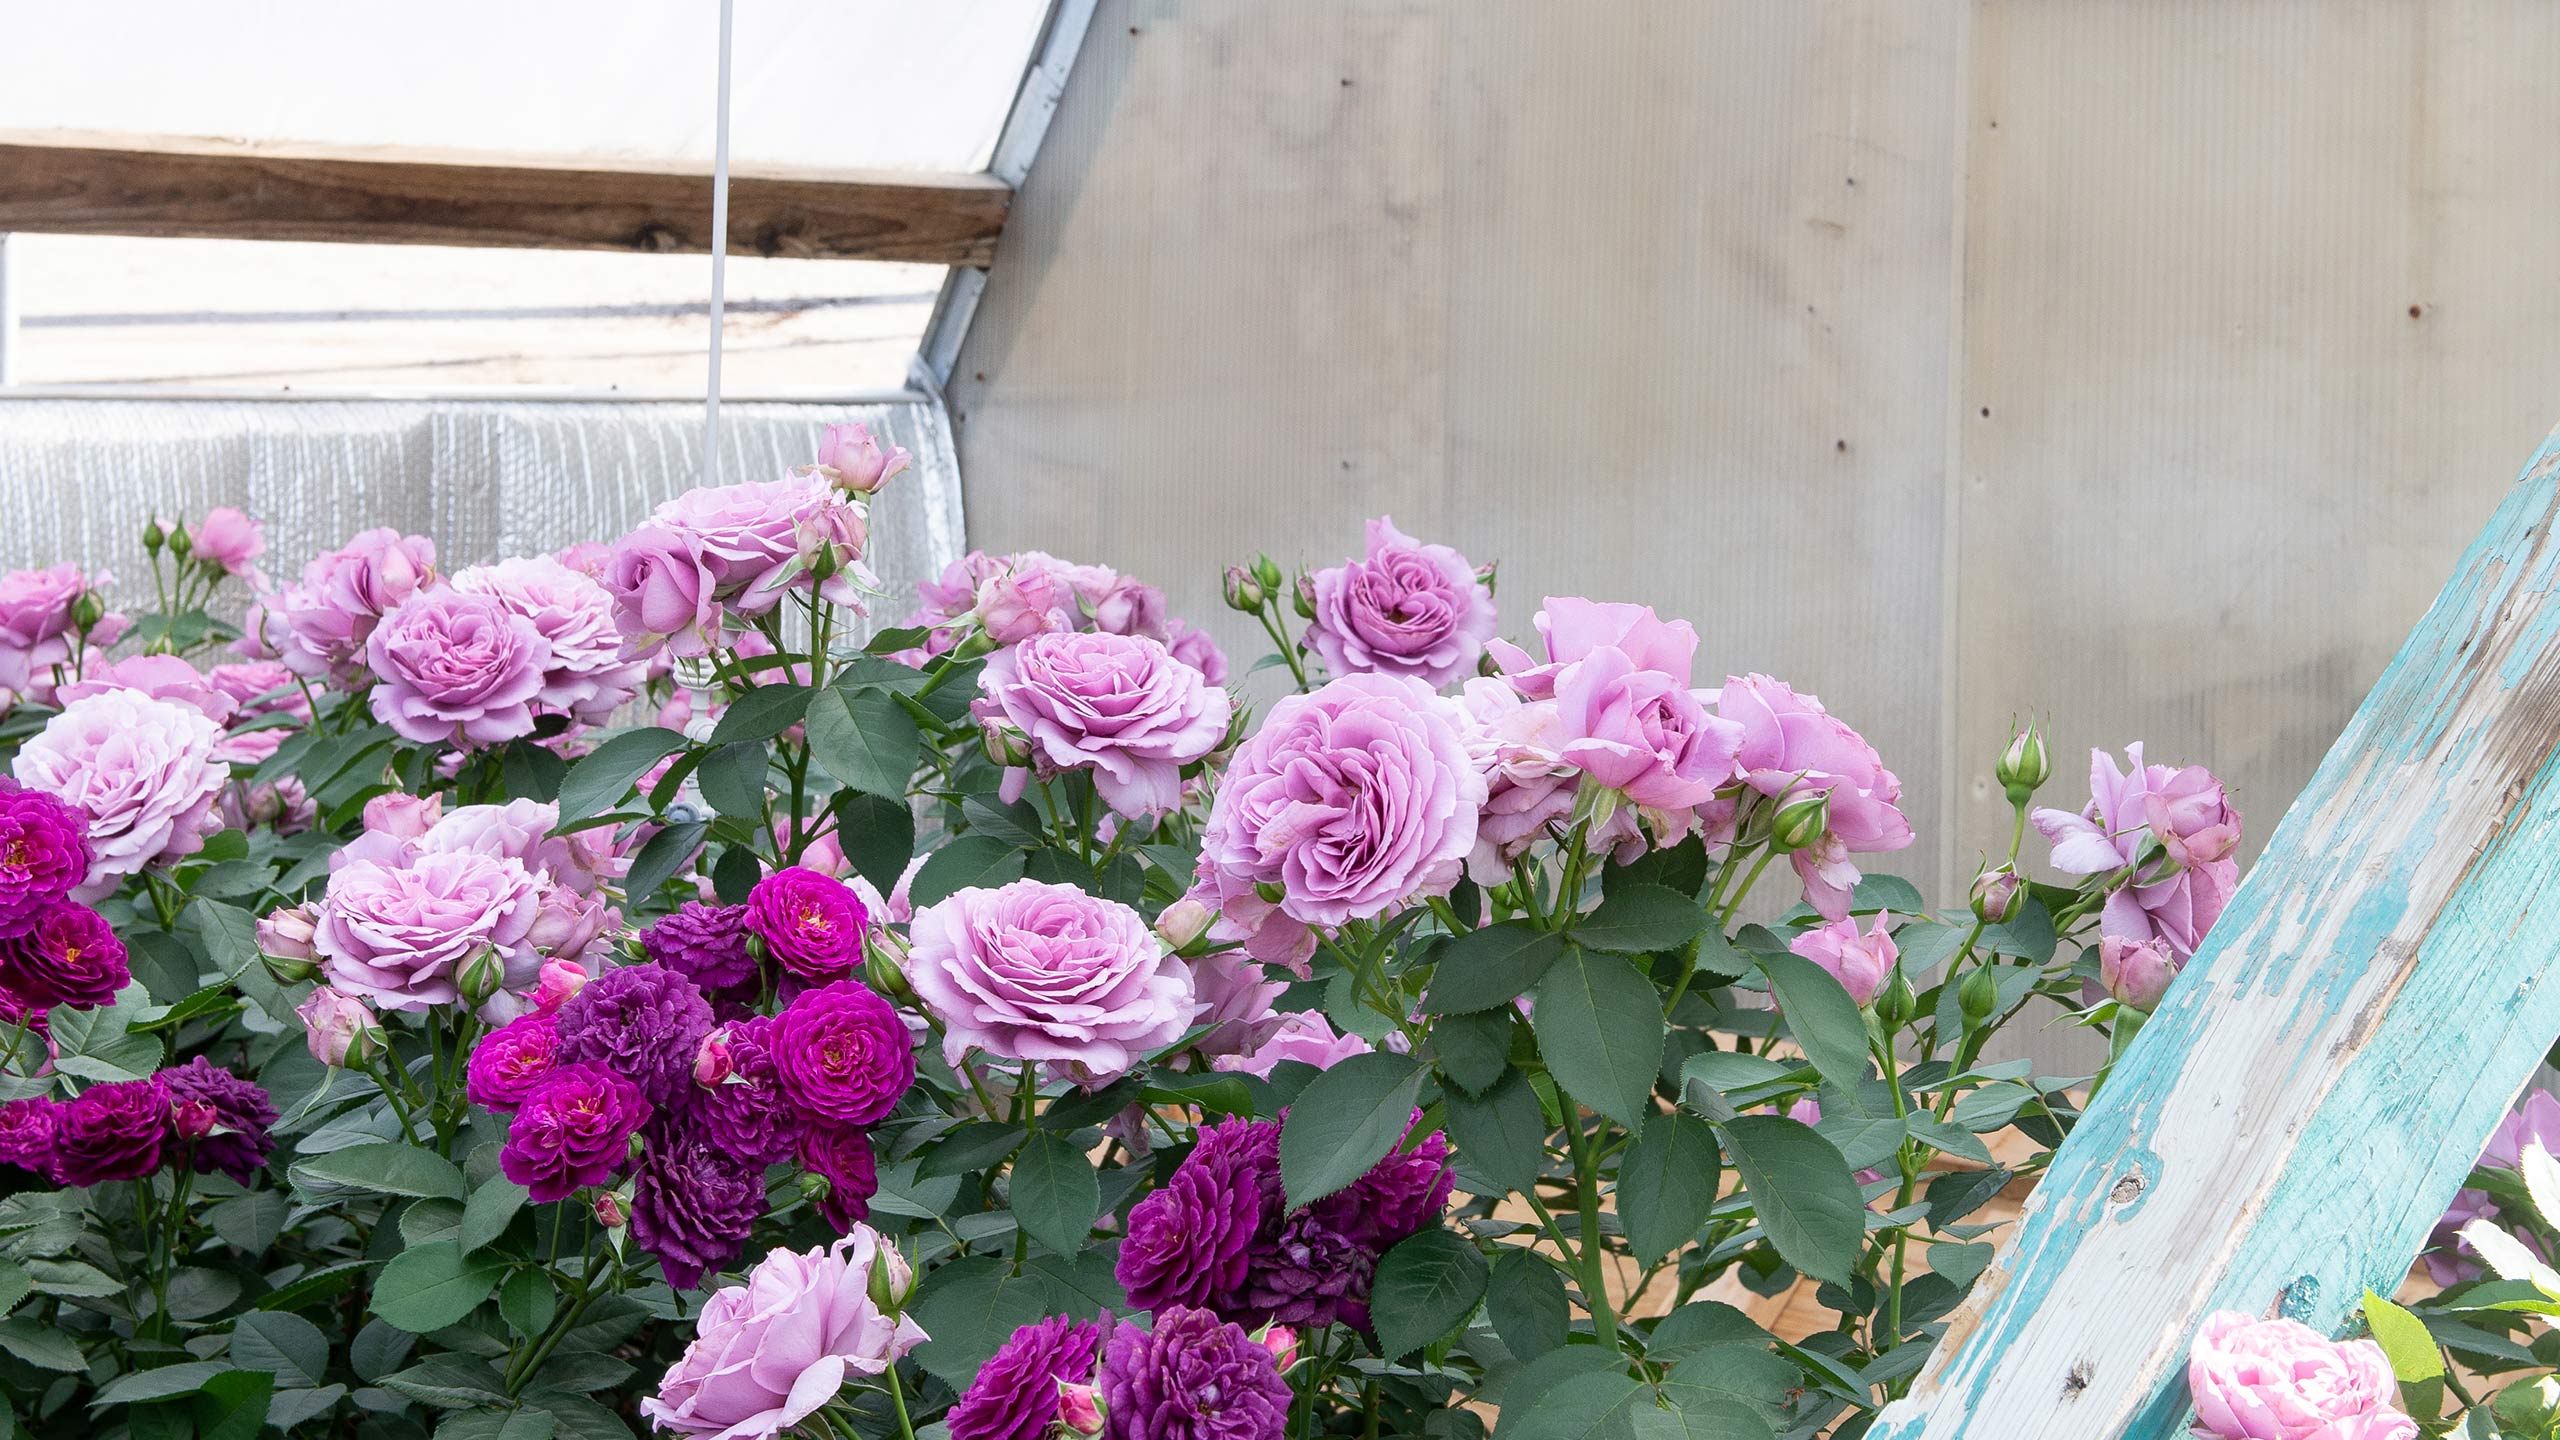 Growing roses - expert tips from Hever Castle rose garden - The